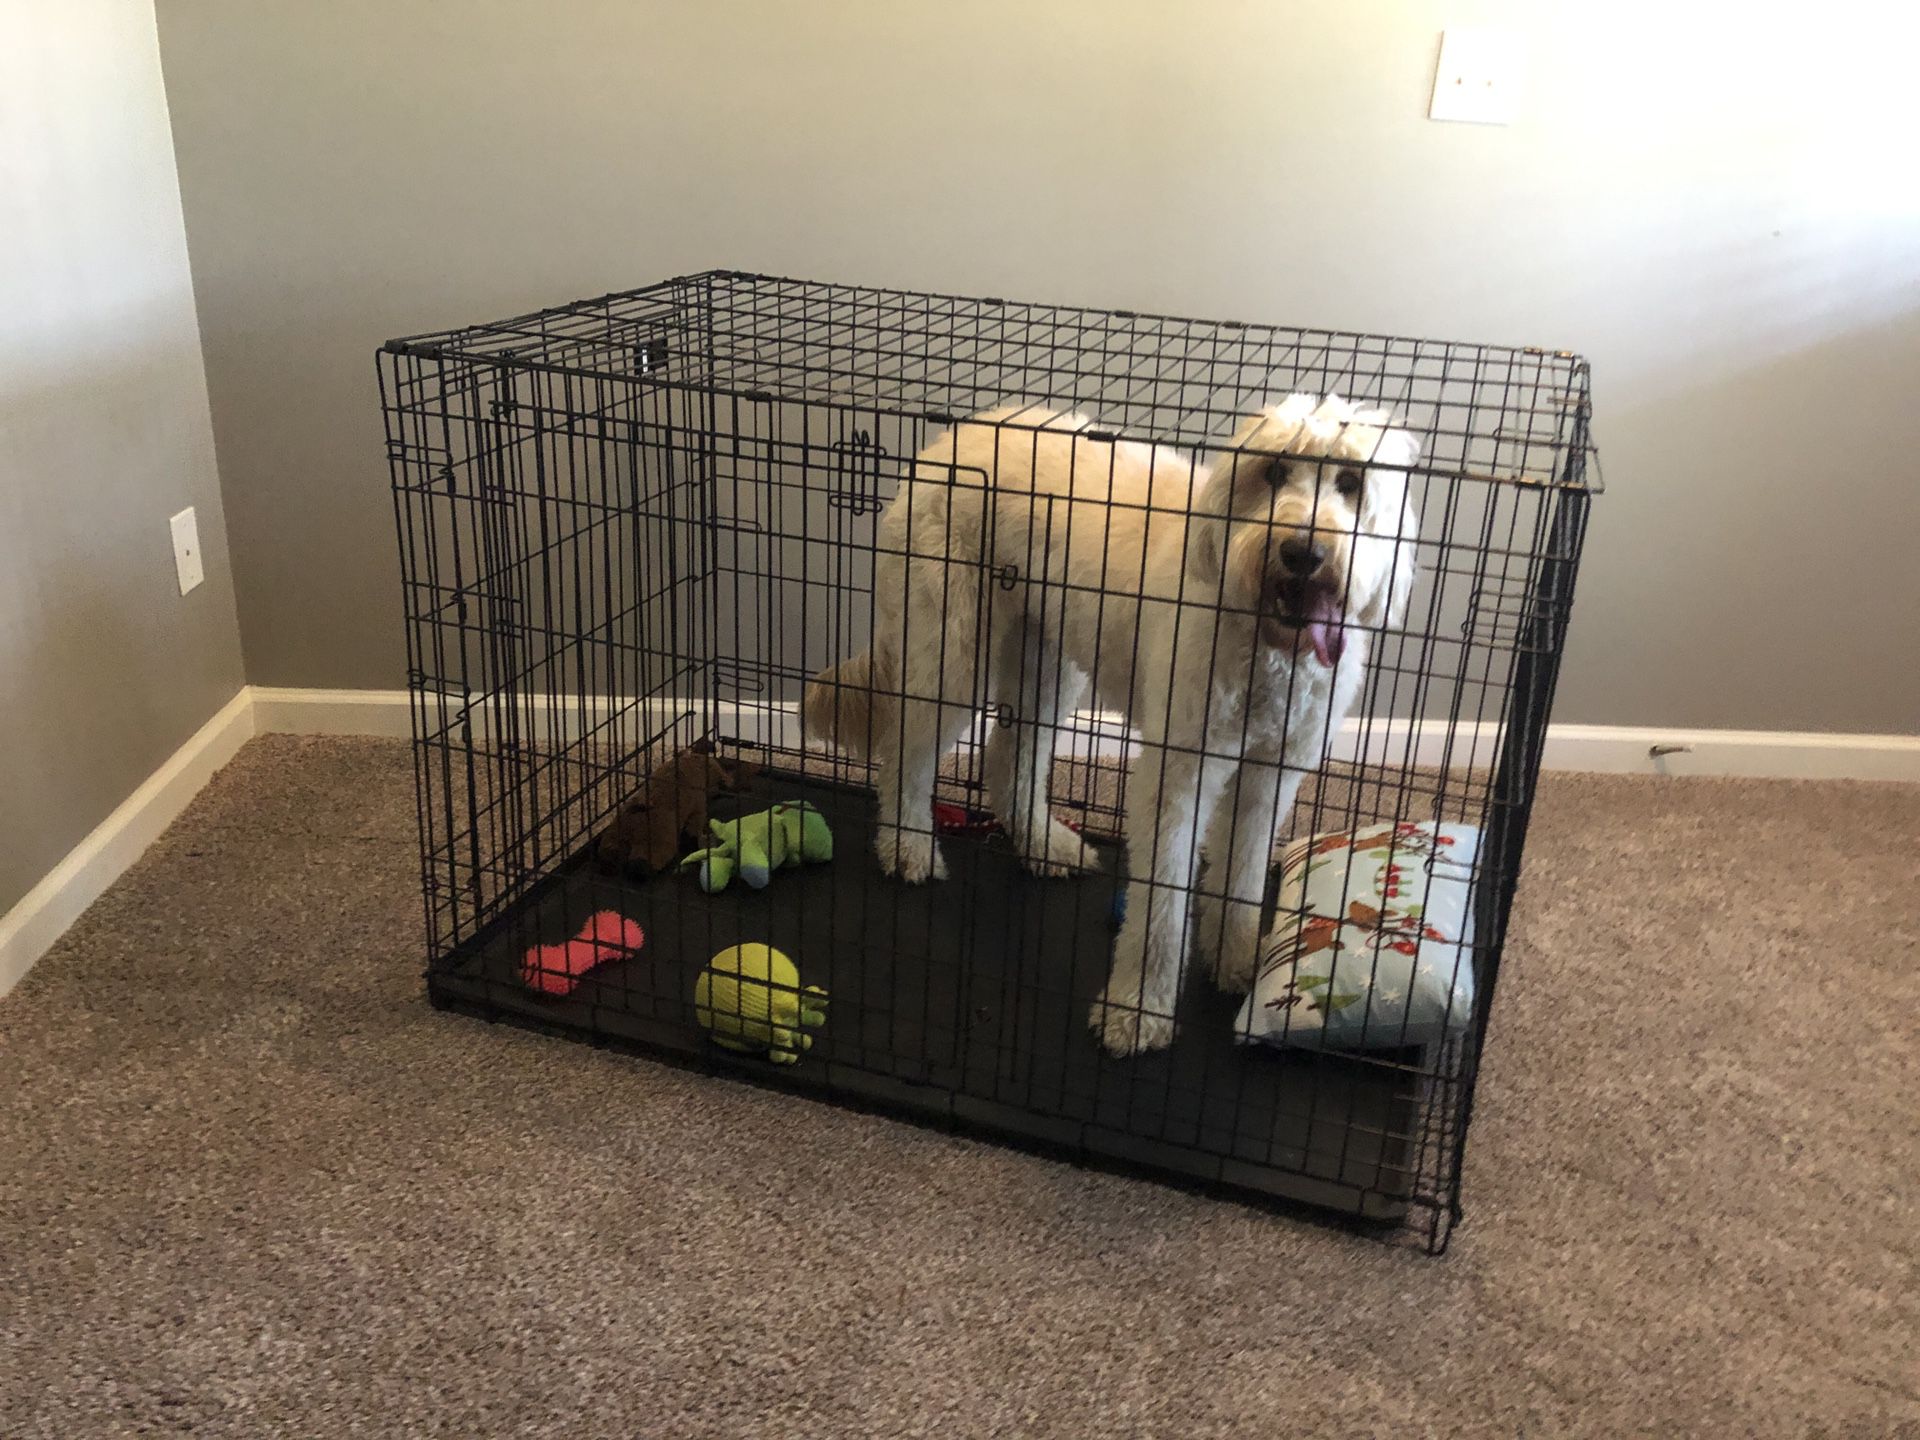 Extra large dog crate